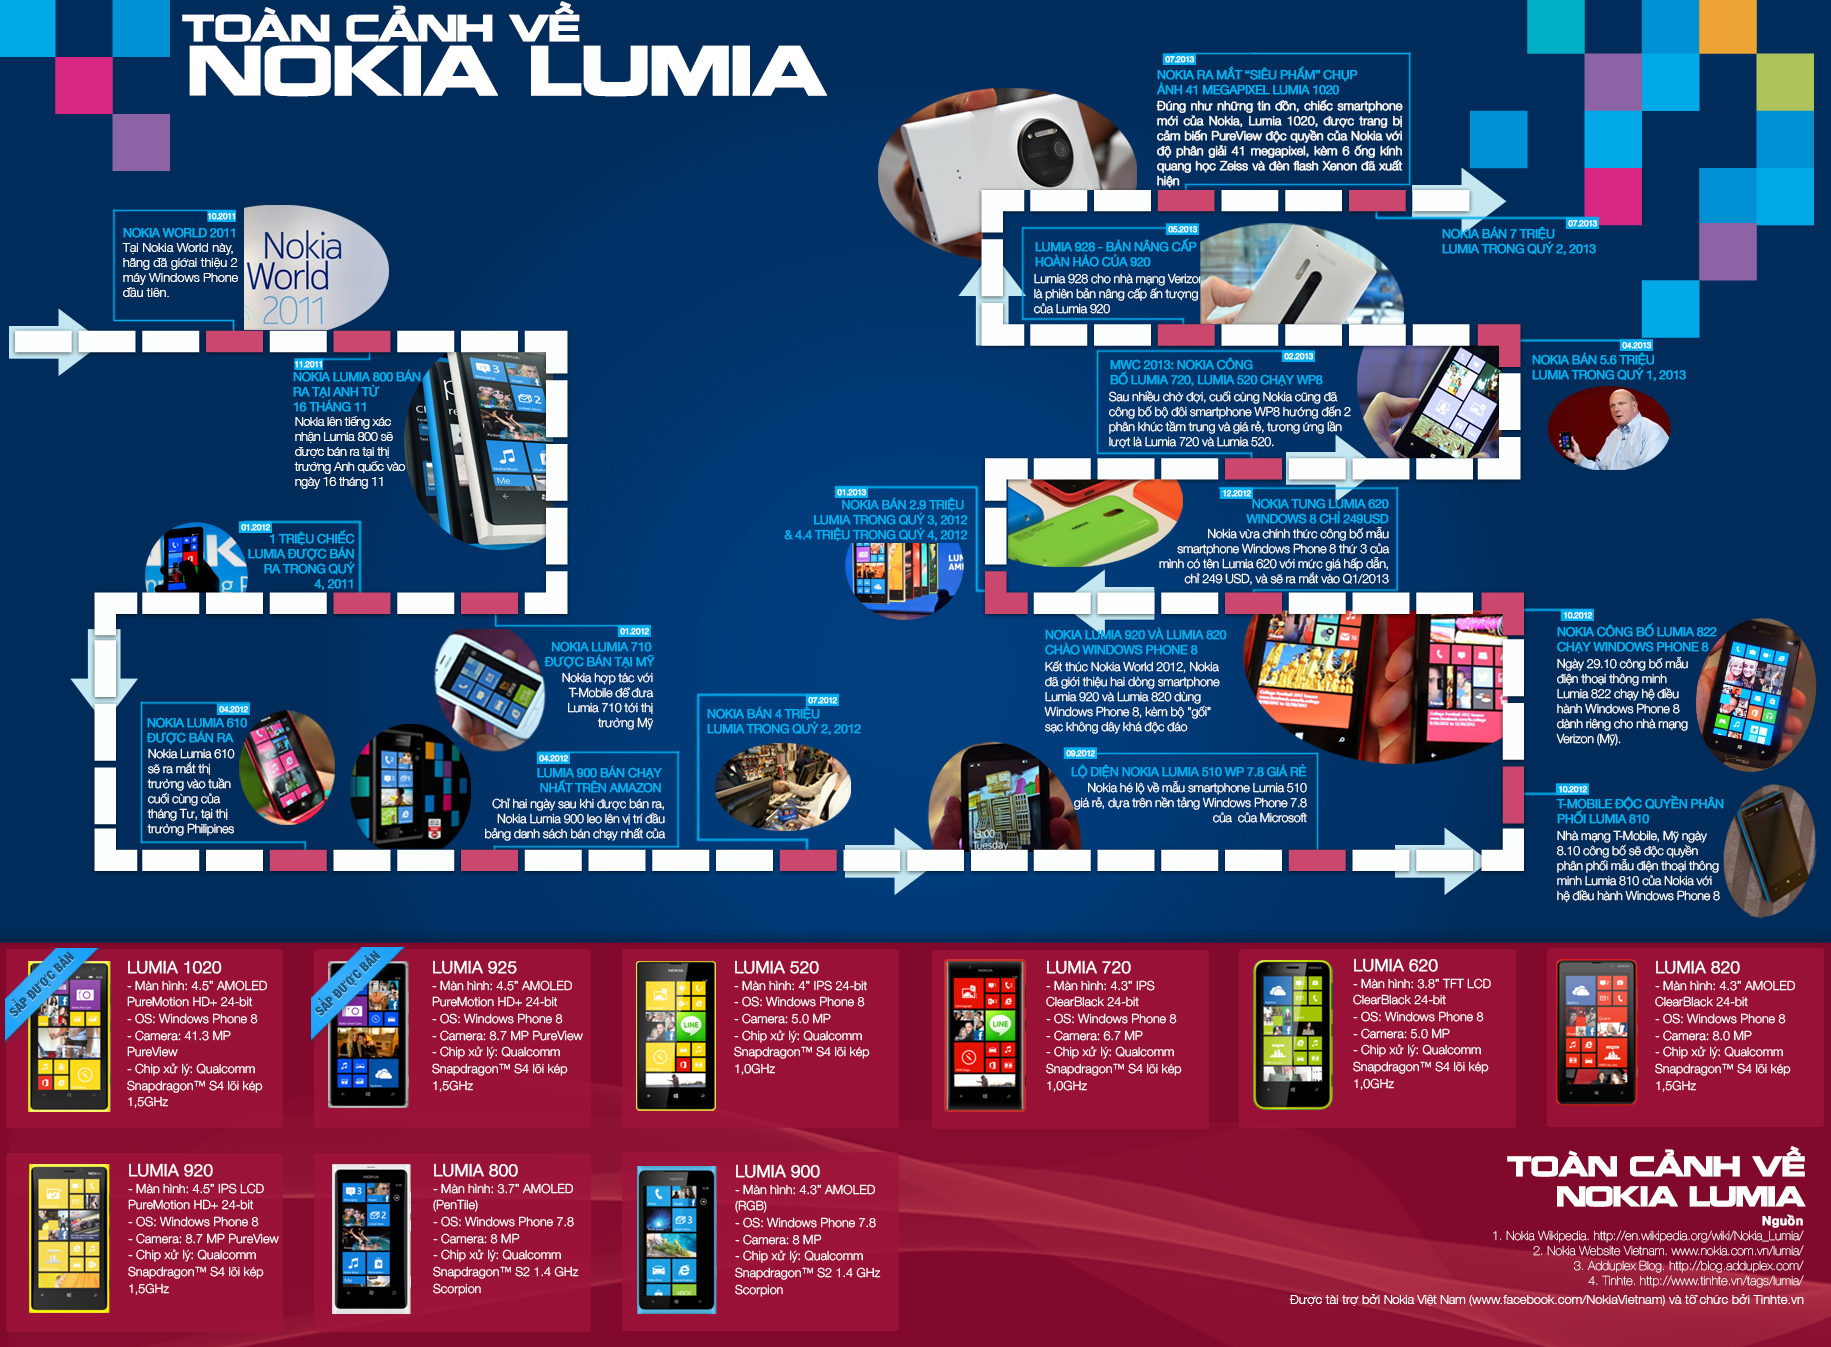 The development of Lumia smartphones